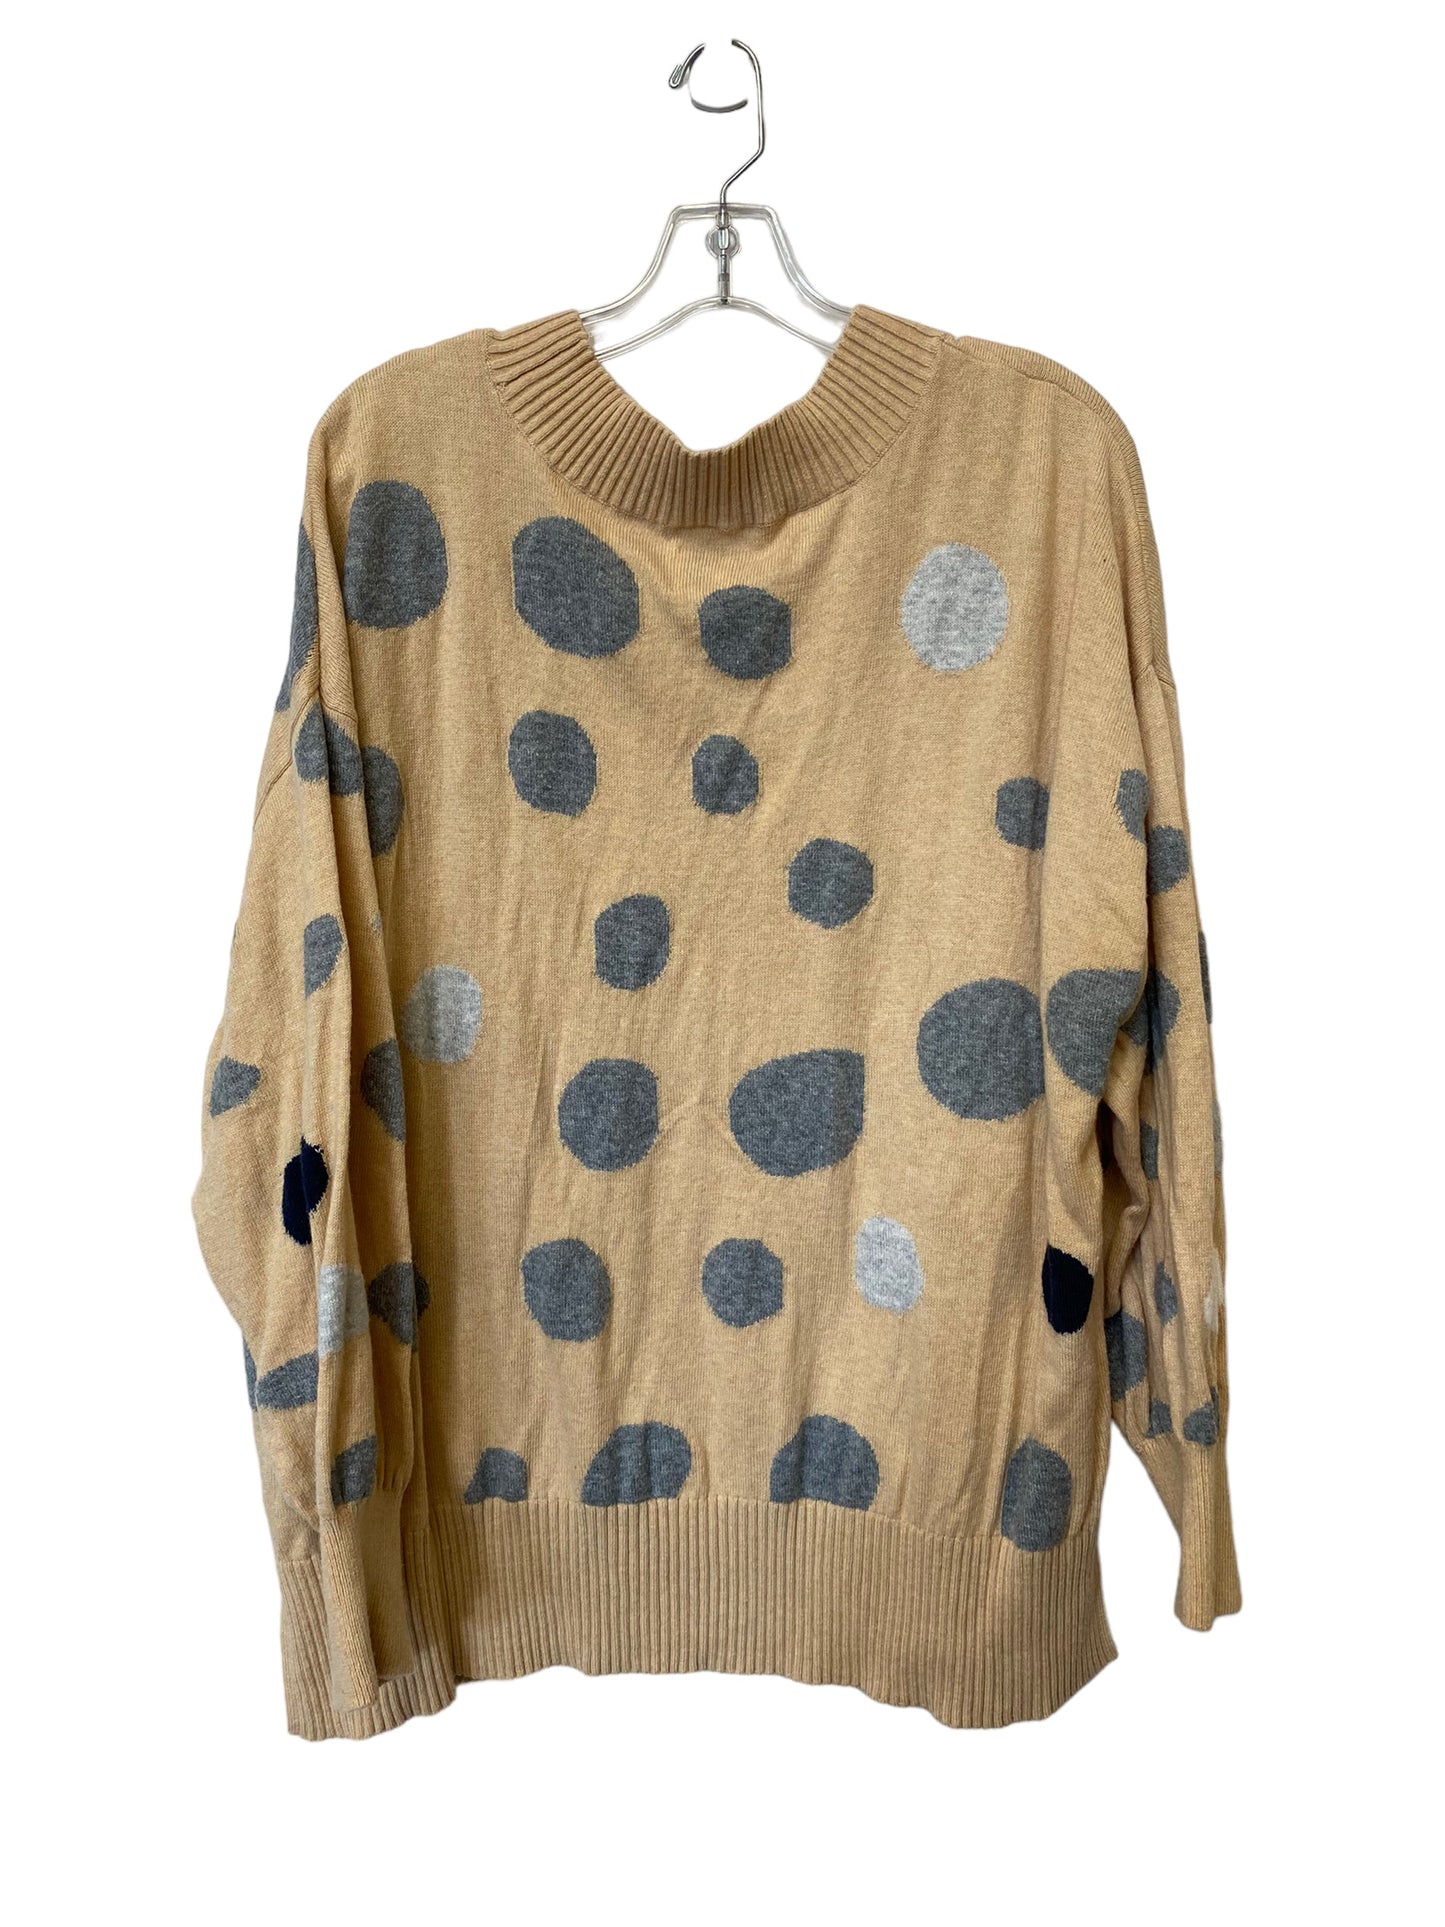 Sweater By Nic + Zoe  Size: 2x